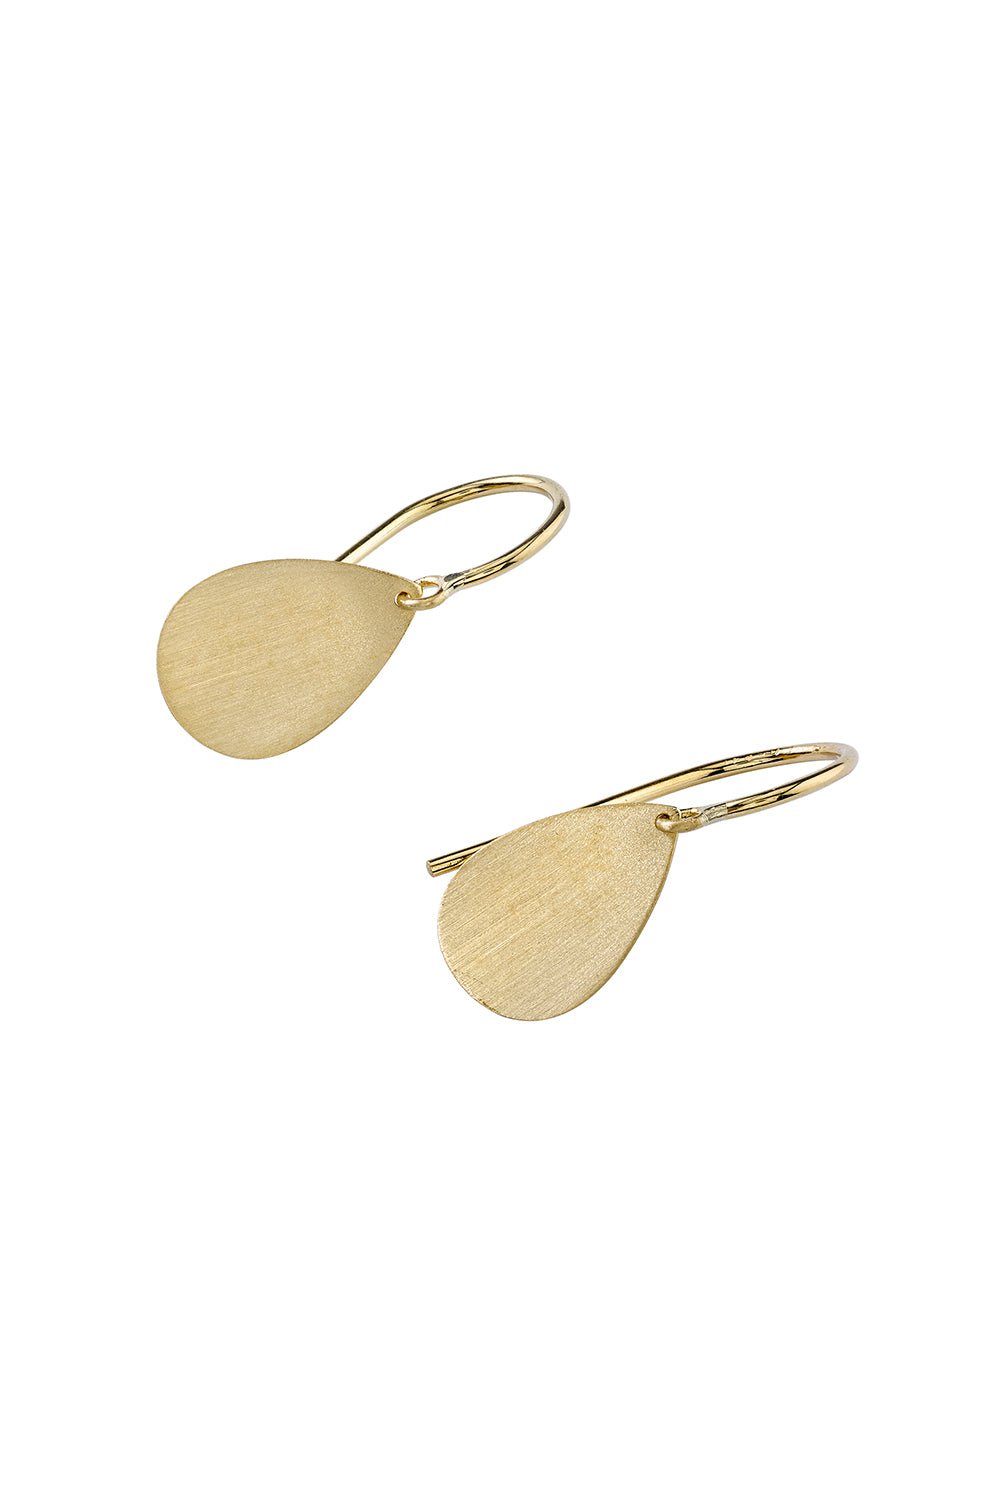 IRENE NEUWIRTH JEWELRY-Flat Drop Earrings-YELLOW GOLD